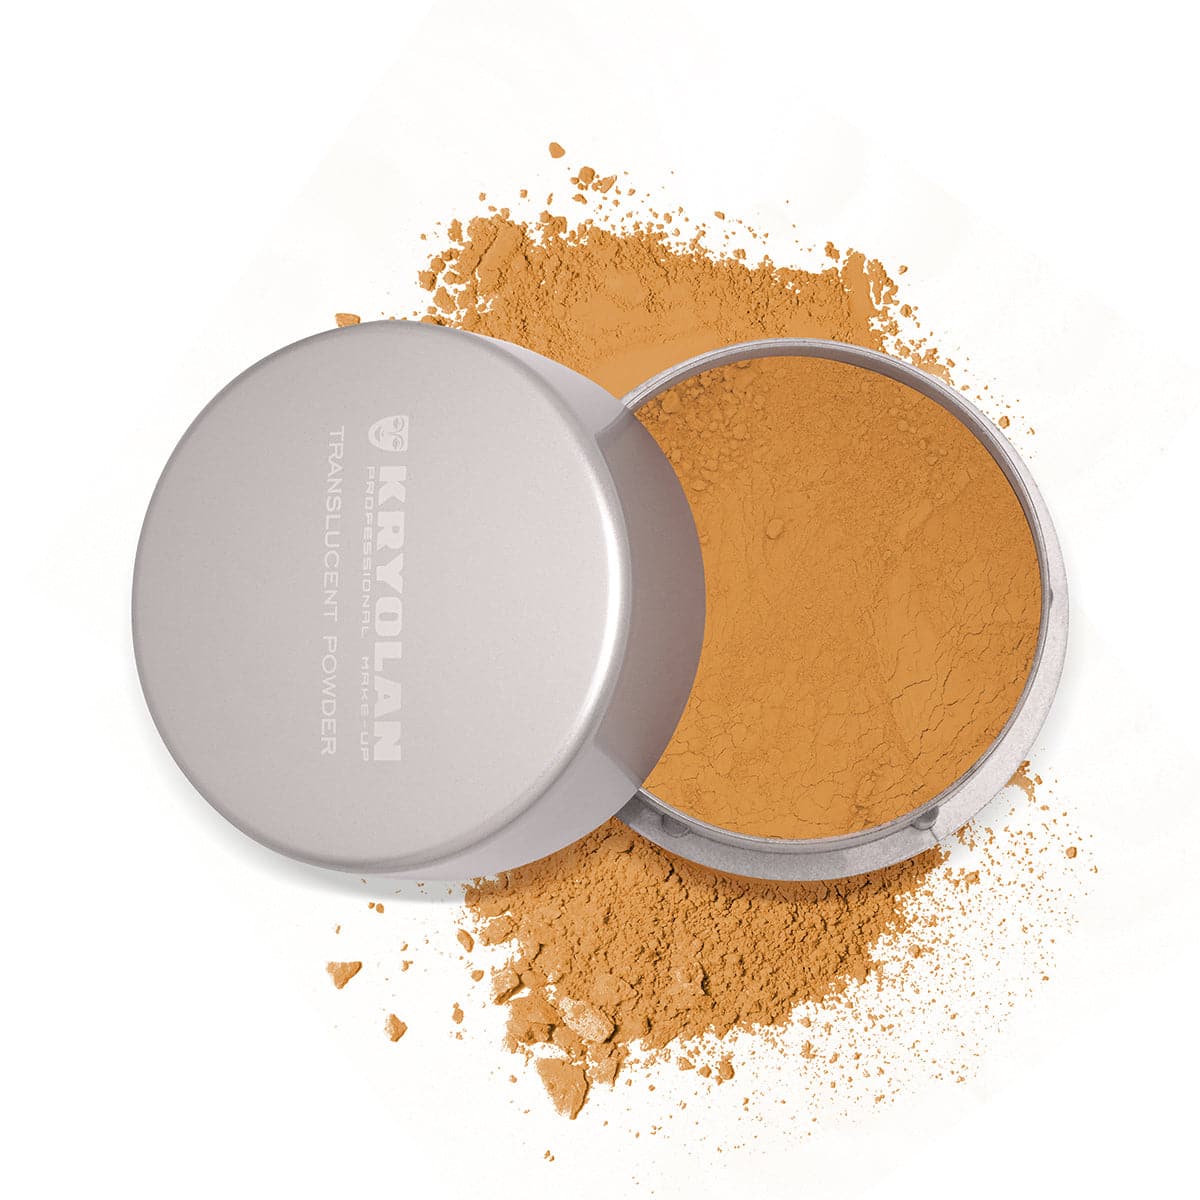 Kryolan Translucent Powder Tl 5 20Gm - Premium Health & Beauty from Kryolan - Just Rs 1400.00! Shop now at Cozmetica